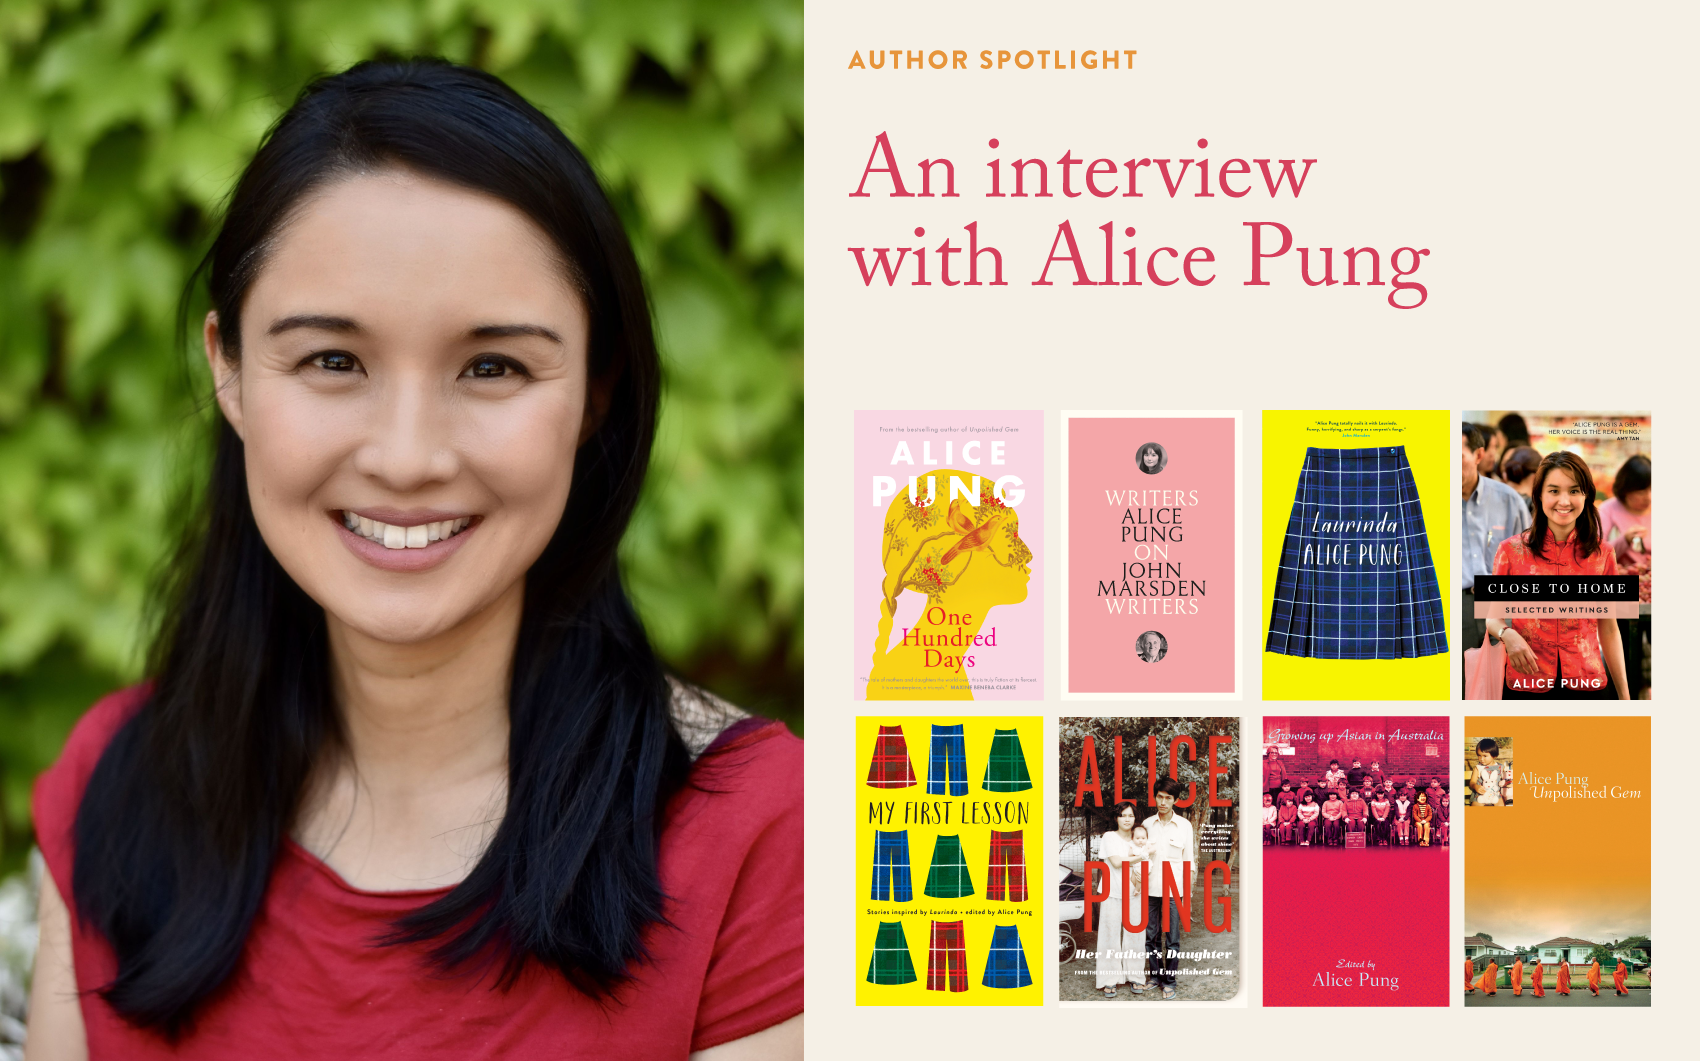 Author Spotlight on Alice Pung